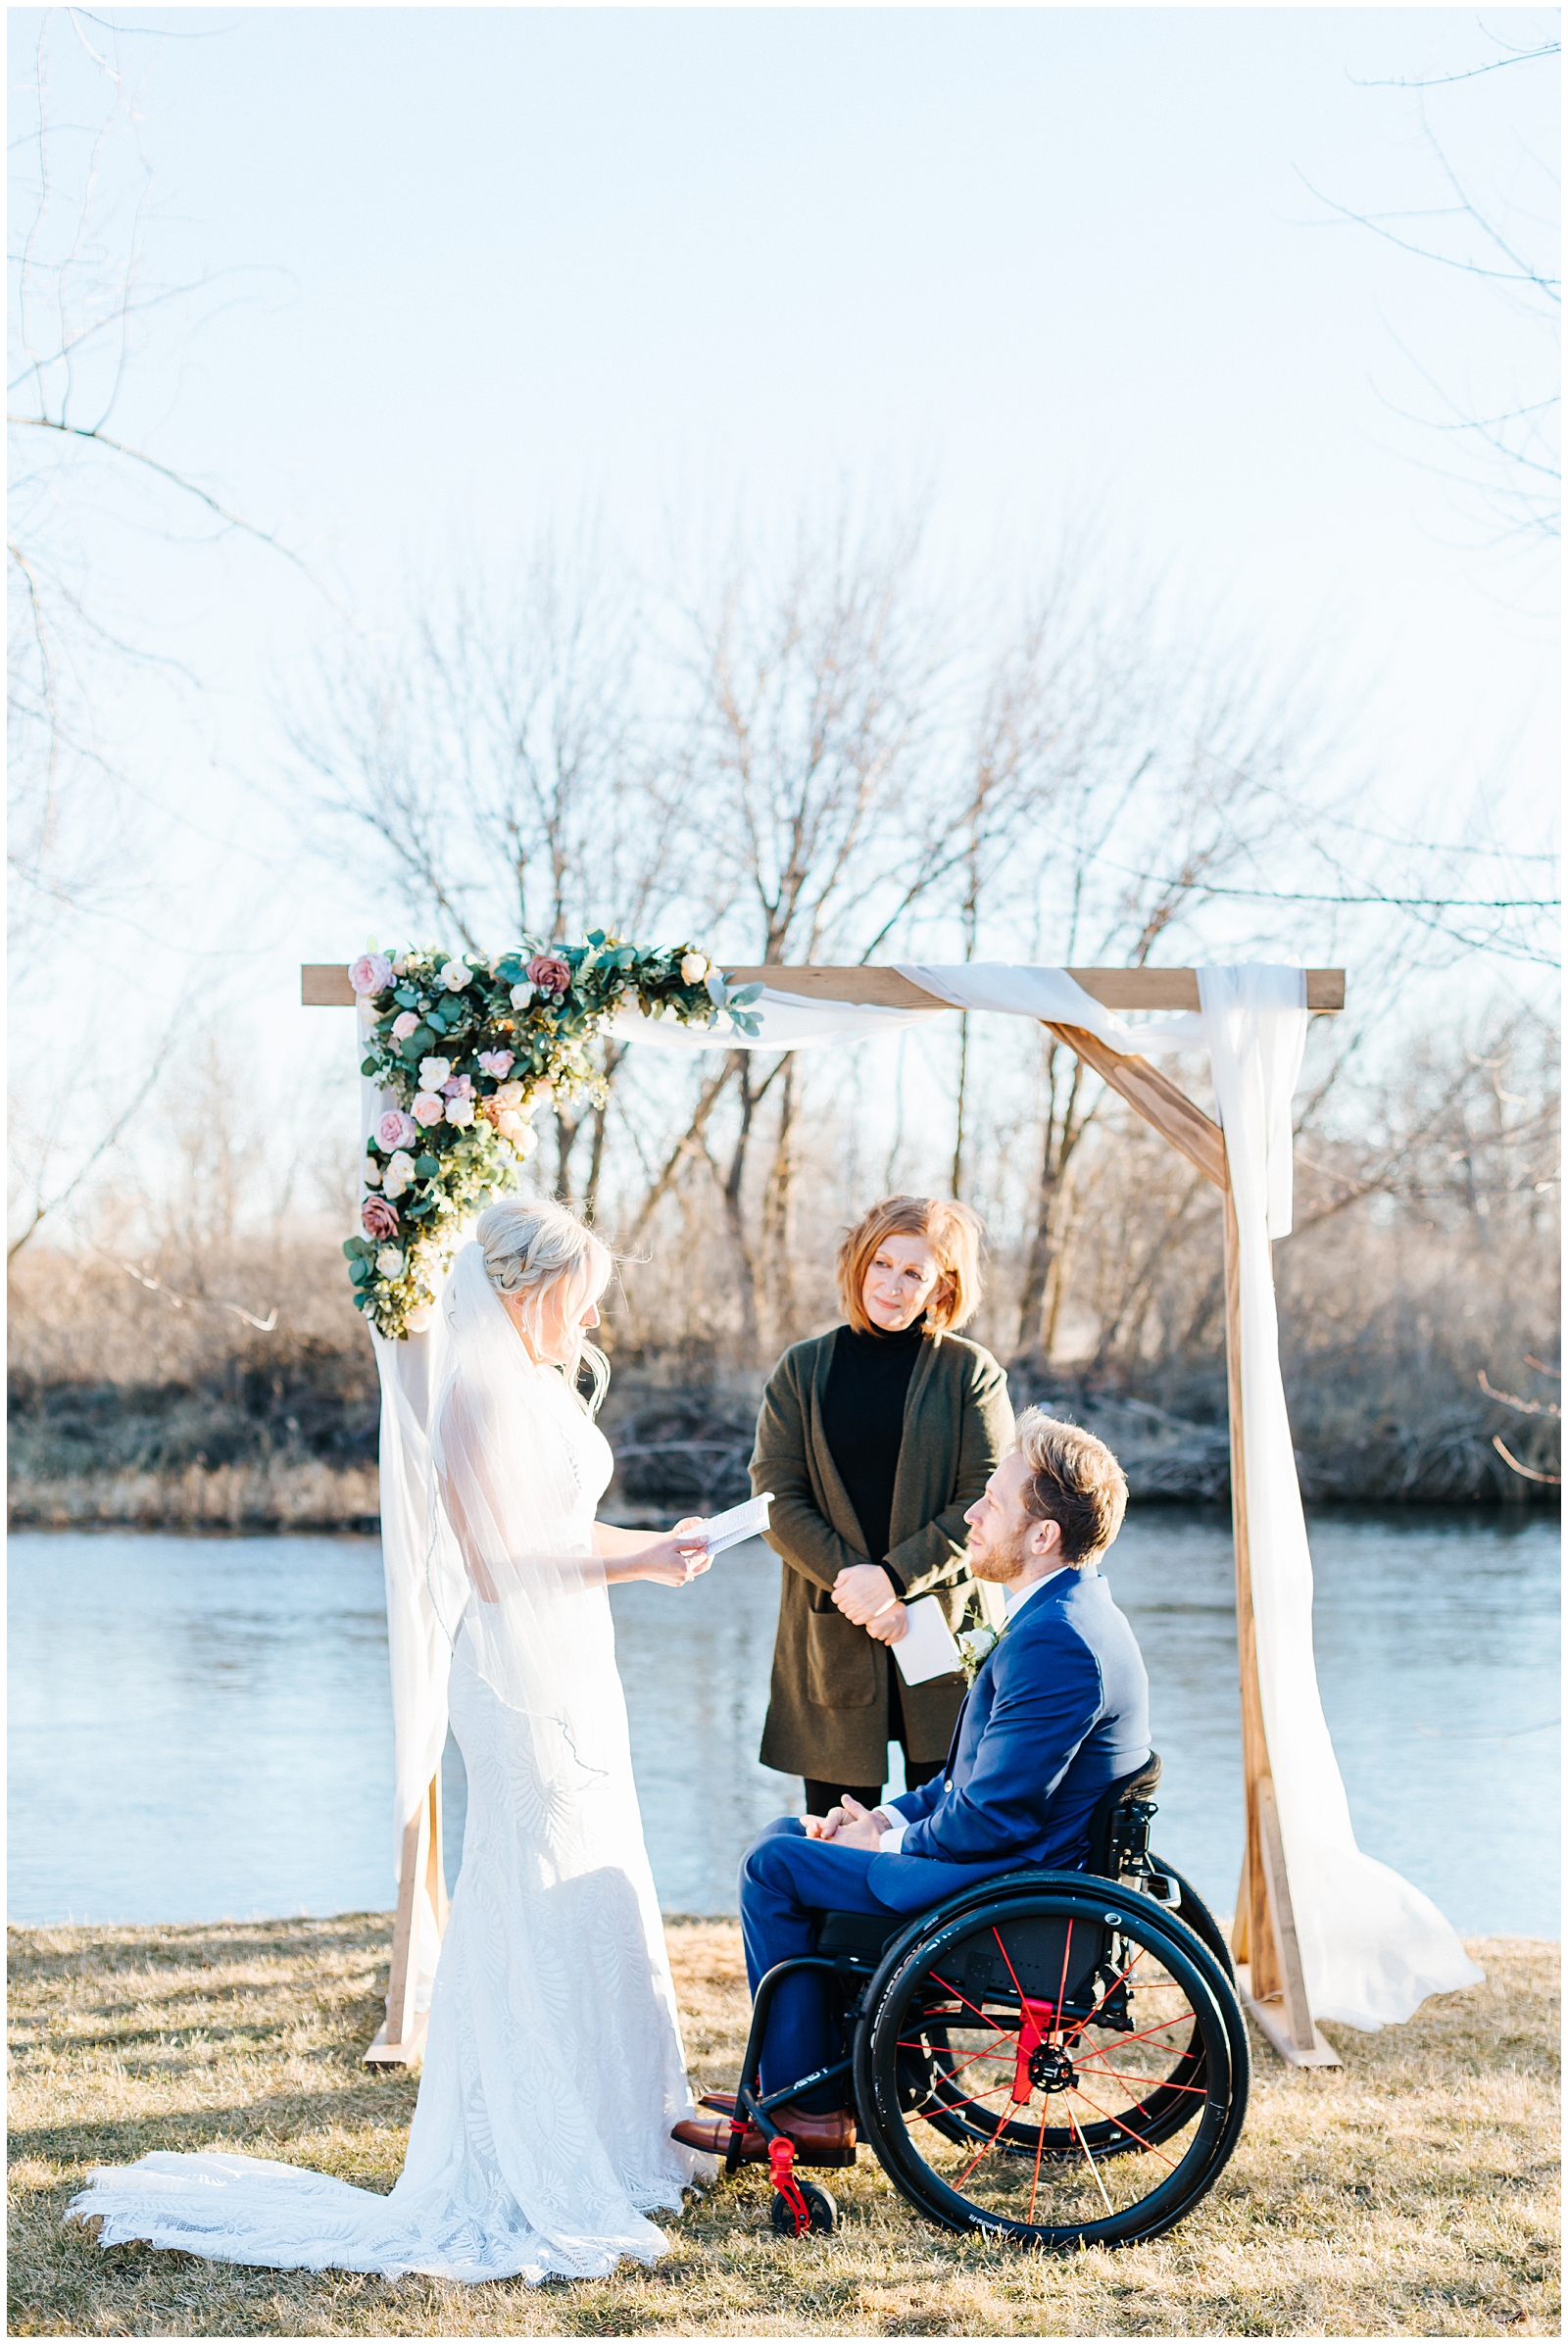 Heartfelt Idaho Spring Elopement Wedding Ceremony - Groom in Tragic Accident